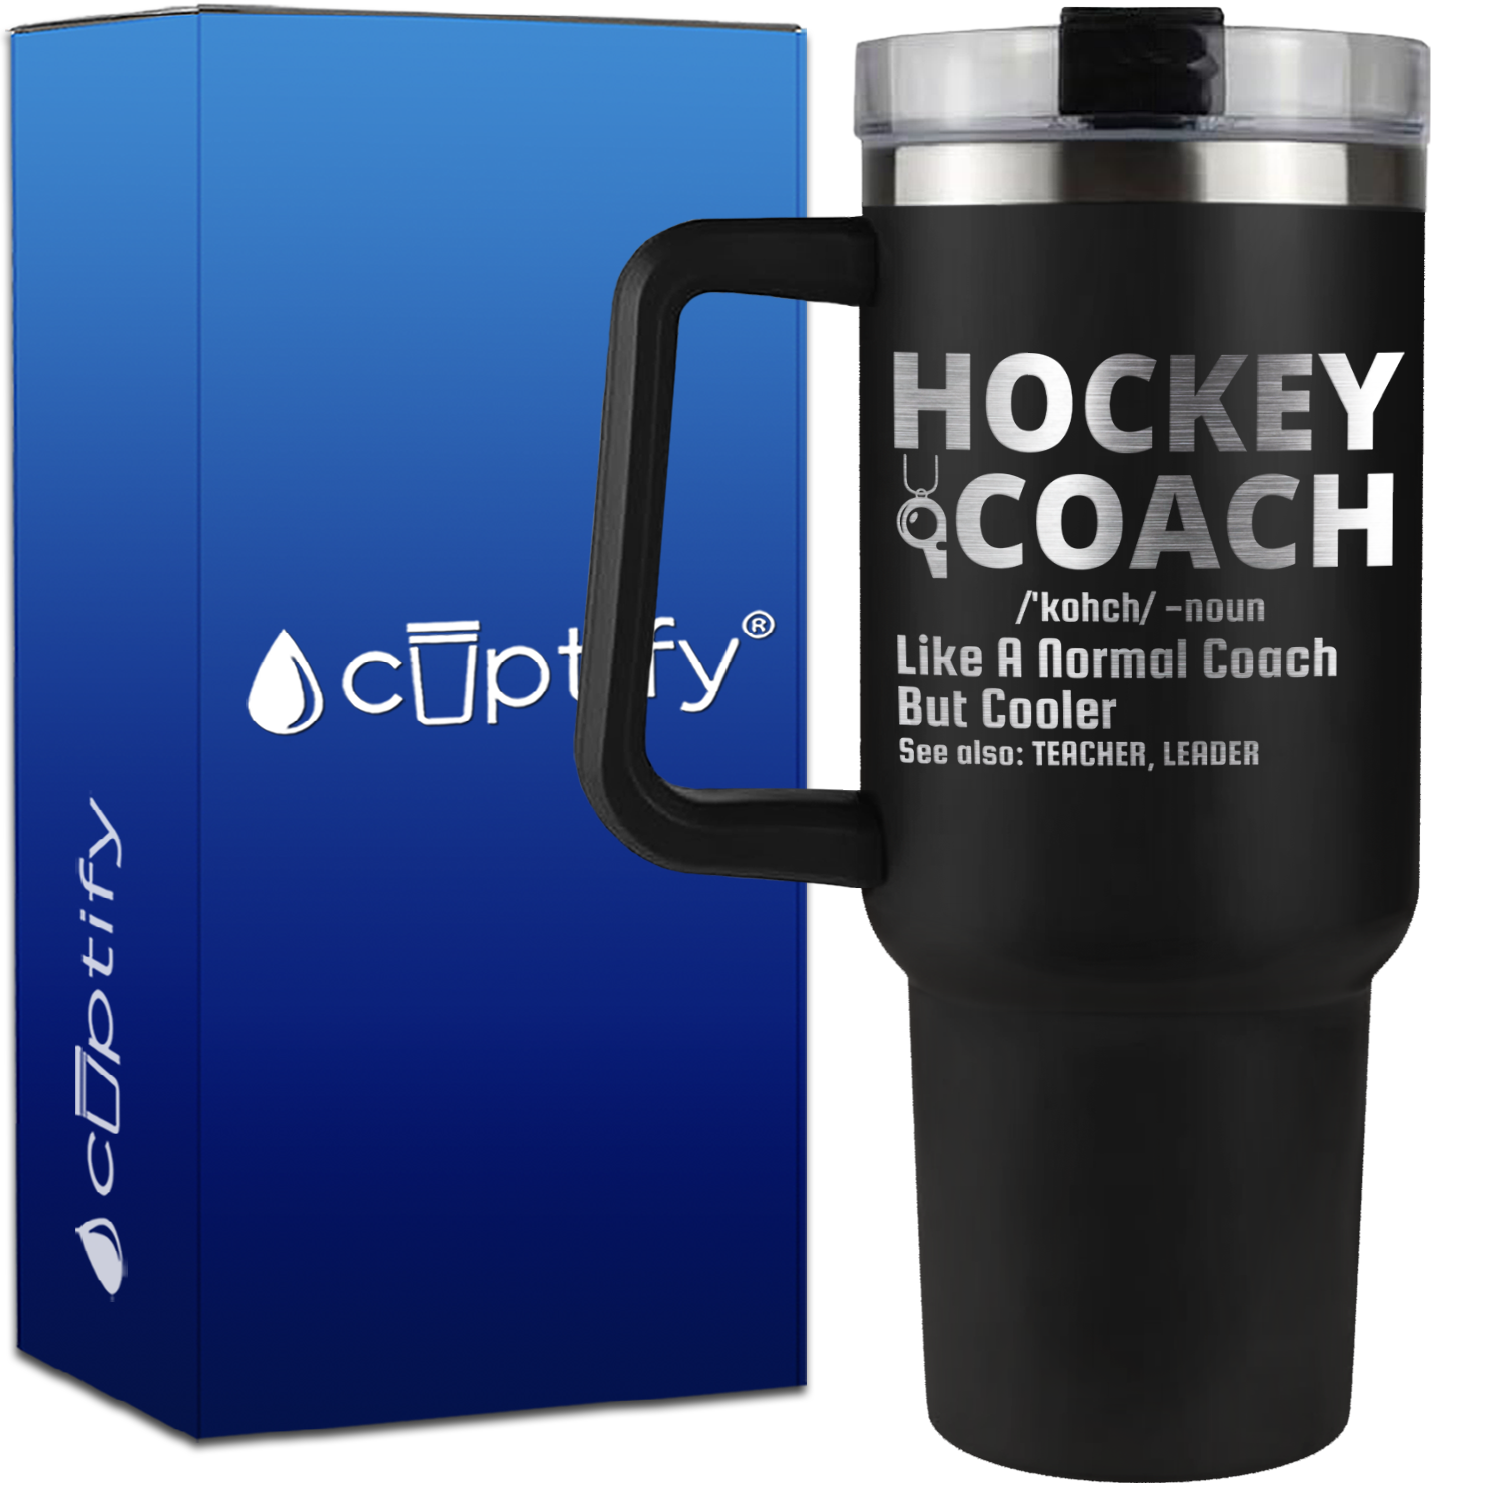 Hockey Coach Like a Normal Coach But Cooler on 40oz Hockey Traveler Mug